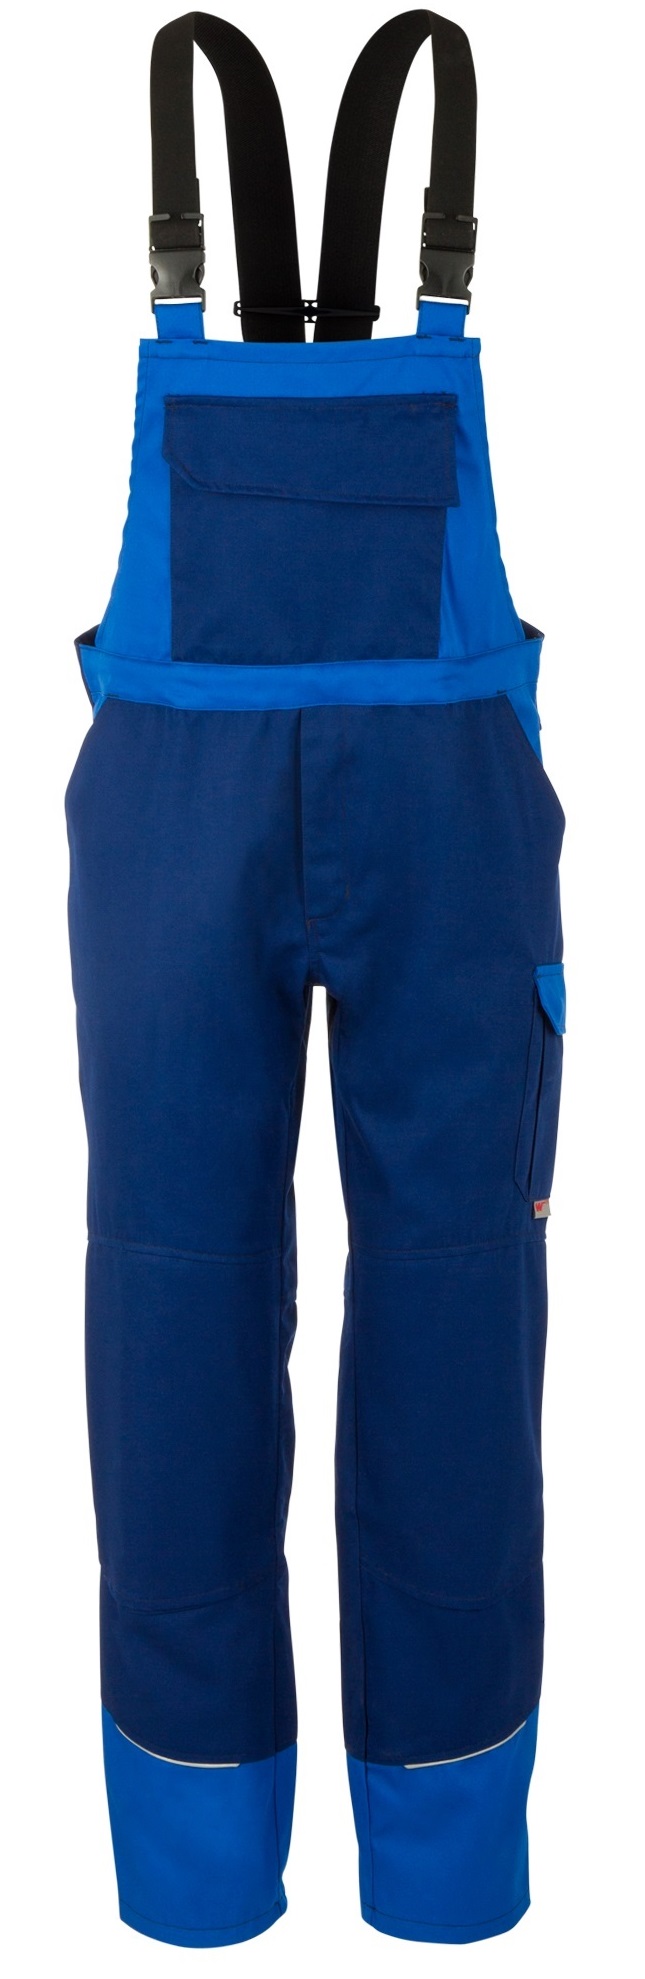 WATEX-Workwear-Latzhose W-One, comoblau / azurblau